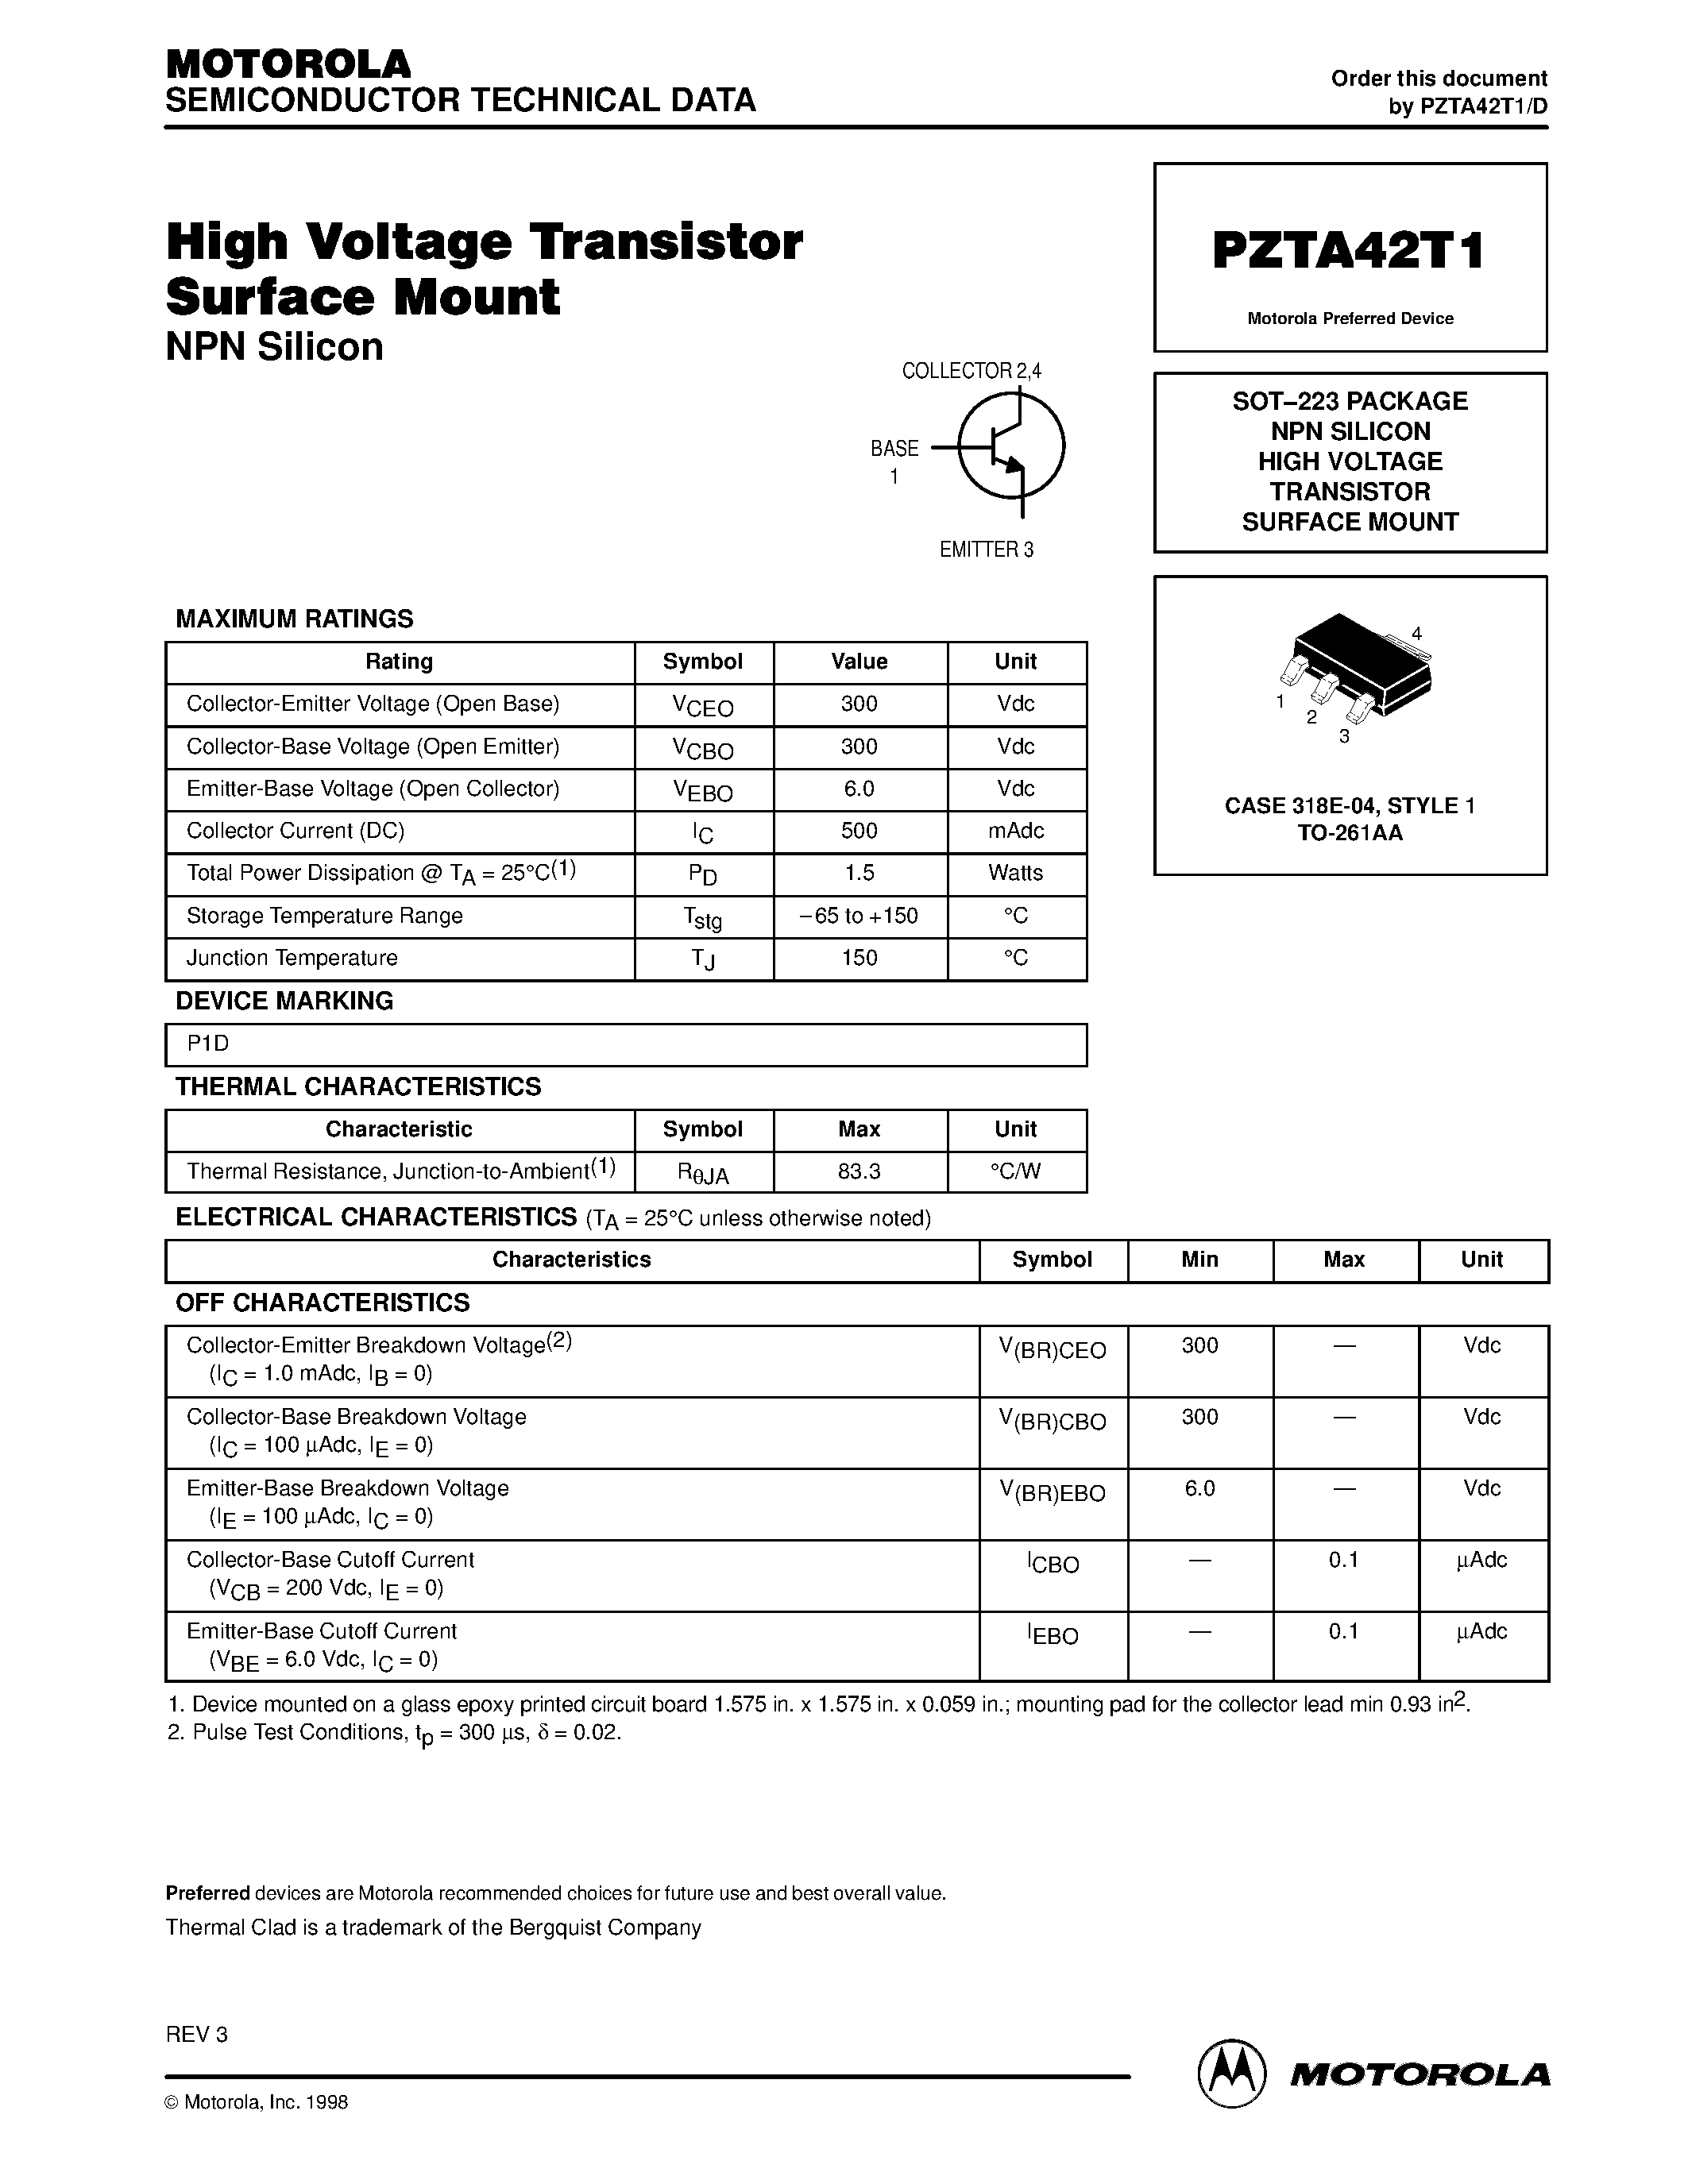 Datasheet PZTA42T1 - NPN SILICON HIGH VOLTAGE TRANSISTOR SURFACE MOUNT page 1